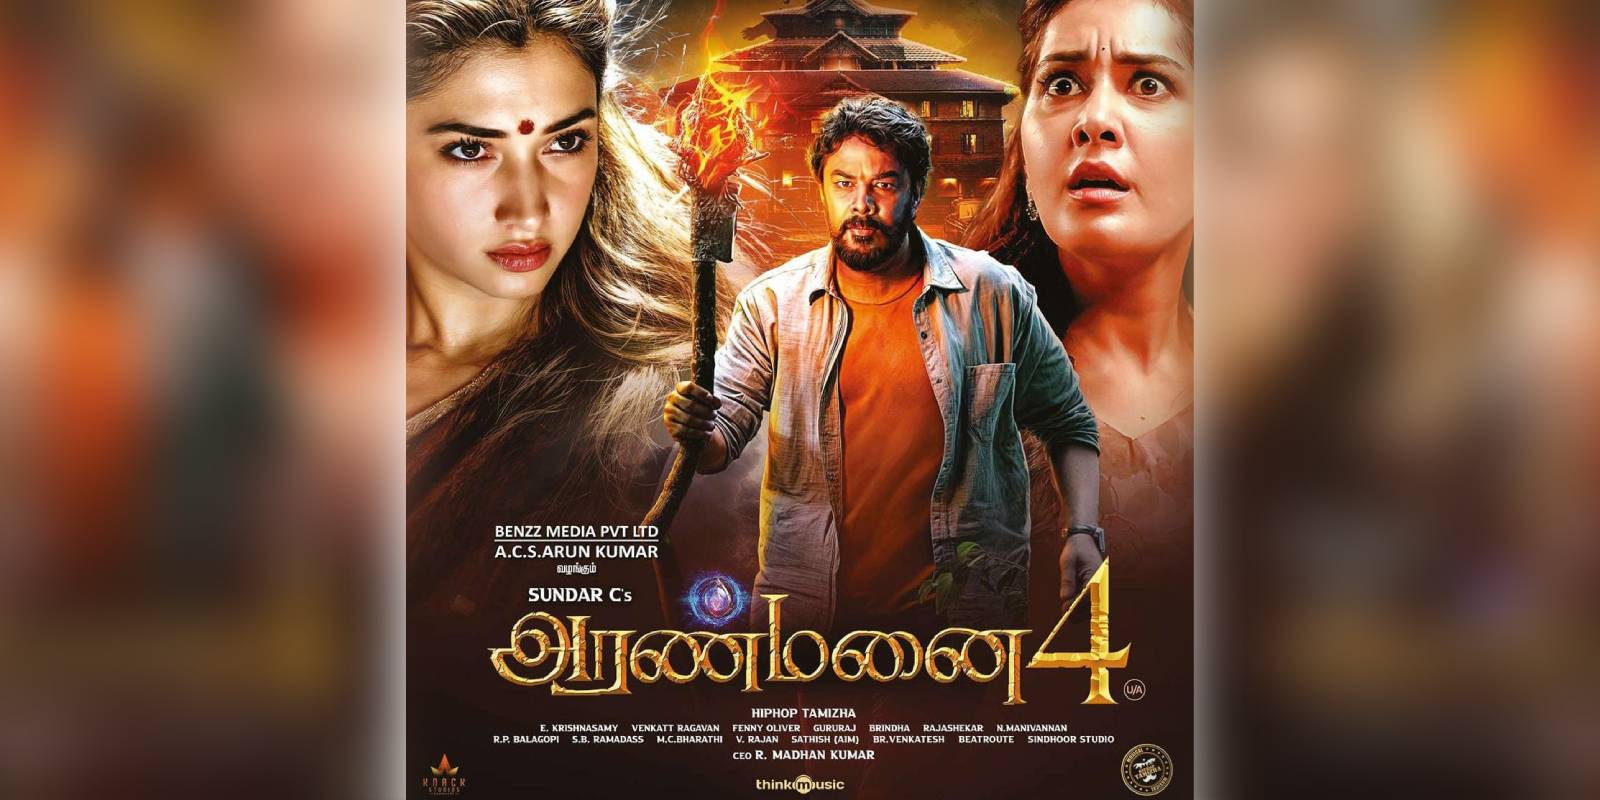 A poster of the film Aranmanai 4